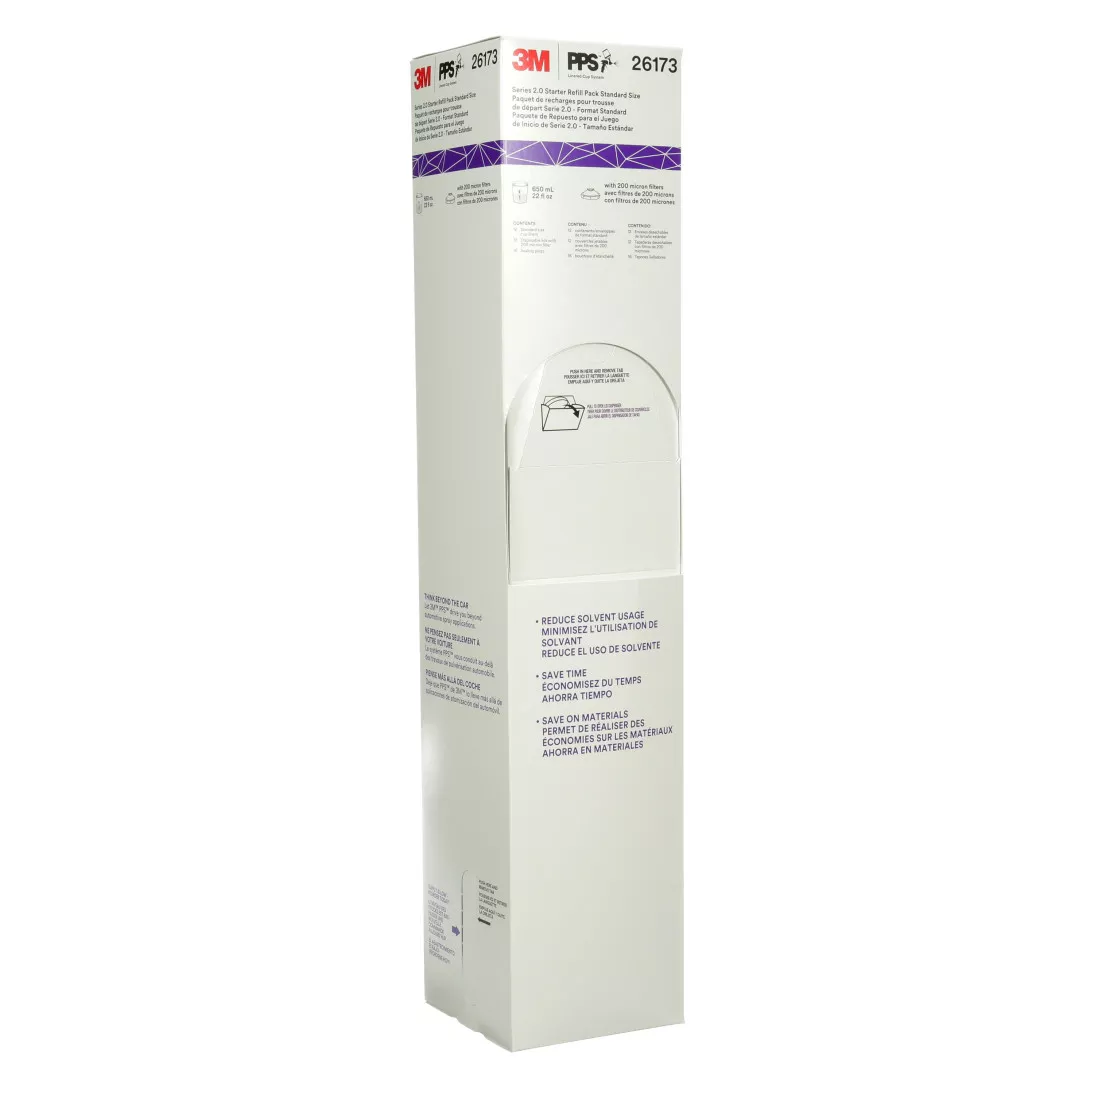 3M™ PPS™ Series 2.0 12-Pack Refill Kit, 26173, Standard (22 fl oz, 650
mL), 200 Micron Filter, 2 kits per case